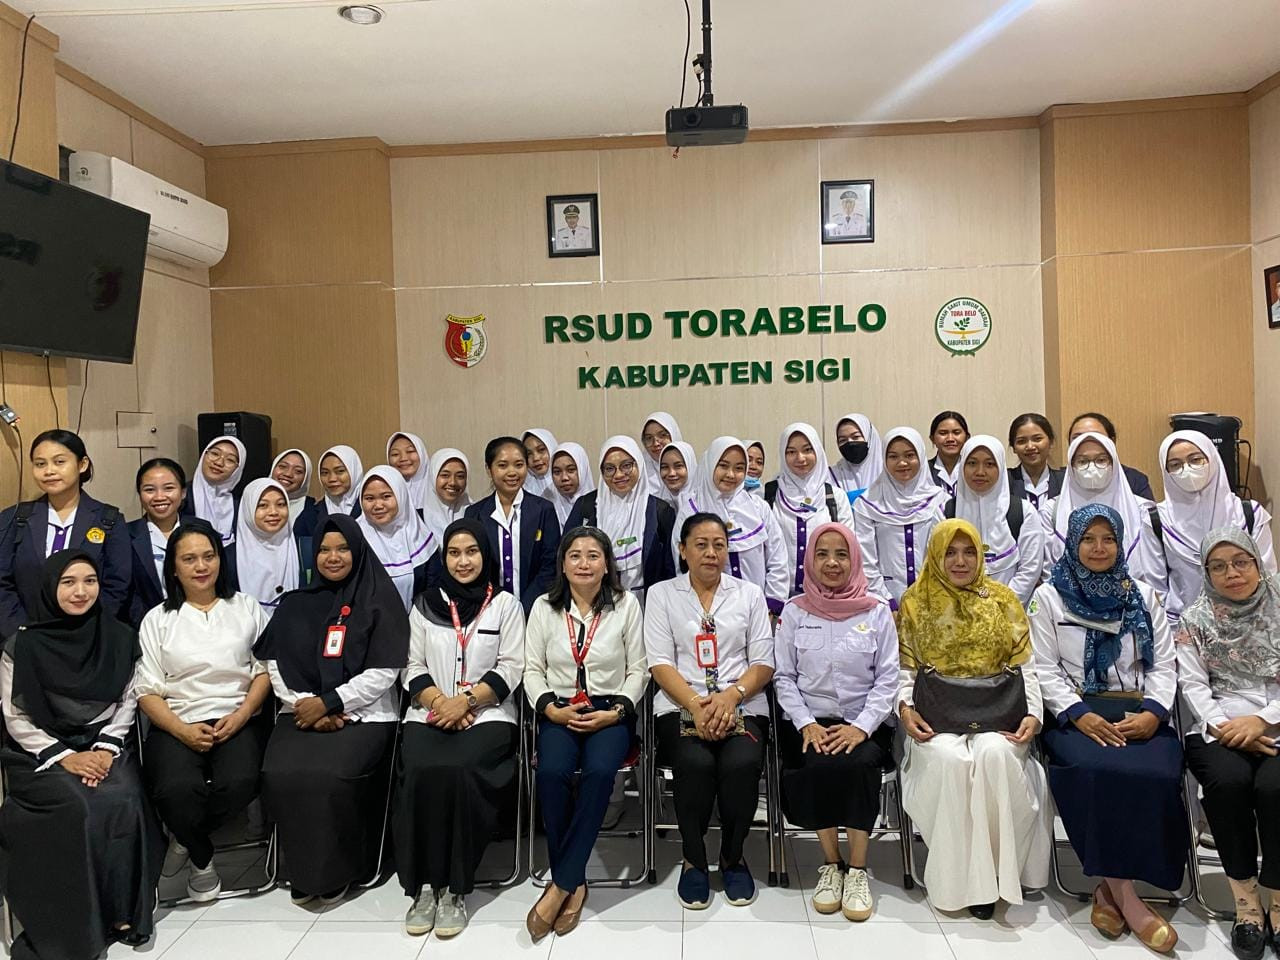 Rumah sakit Torabelo menerima Mahasiswa Praktik Sarjana Tarapan kebidanan.